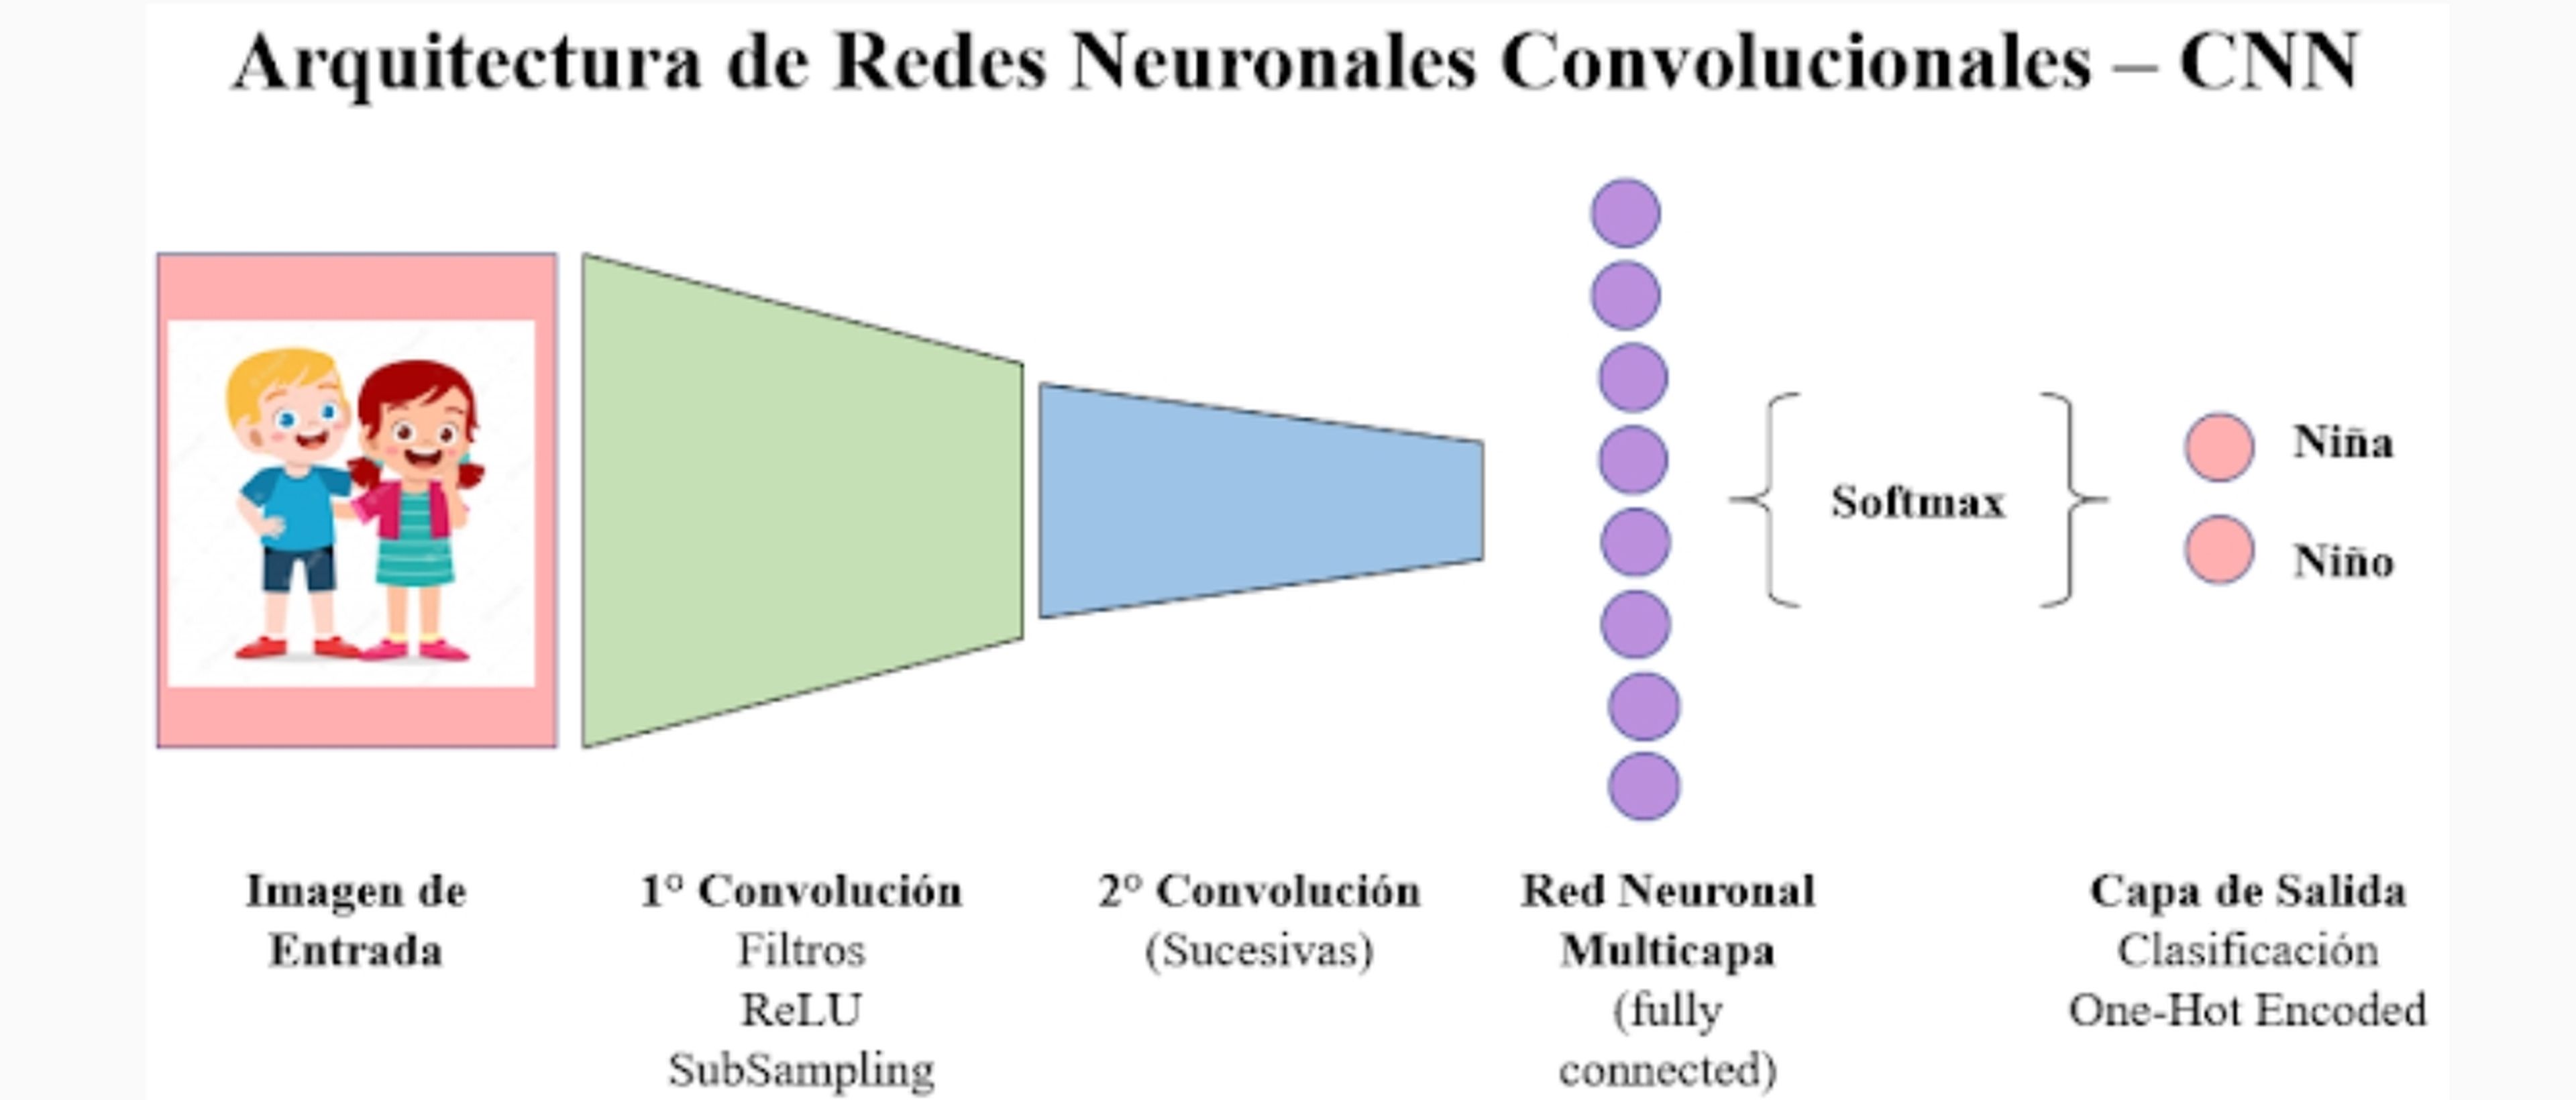 Ren neuronal convolucional